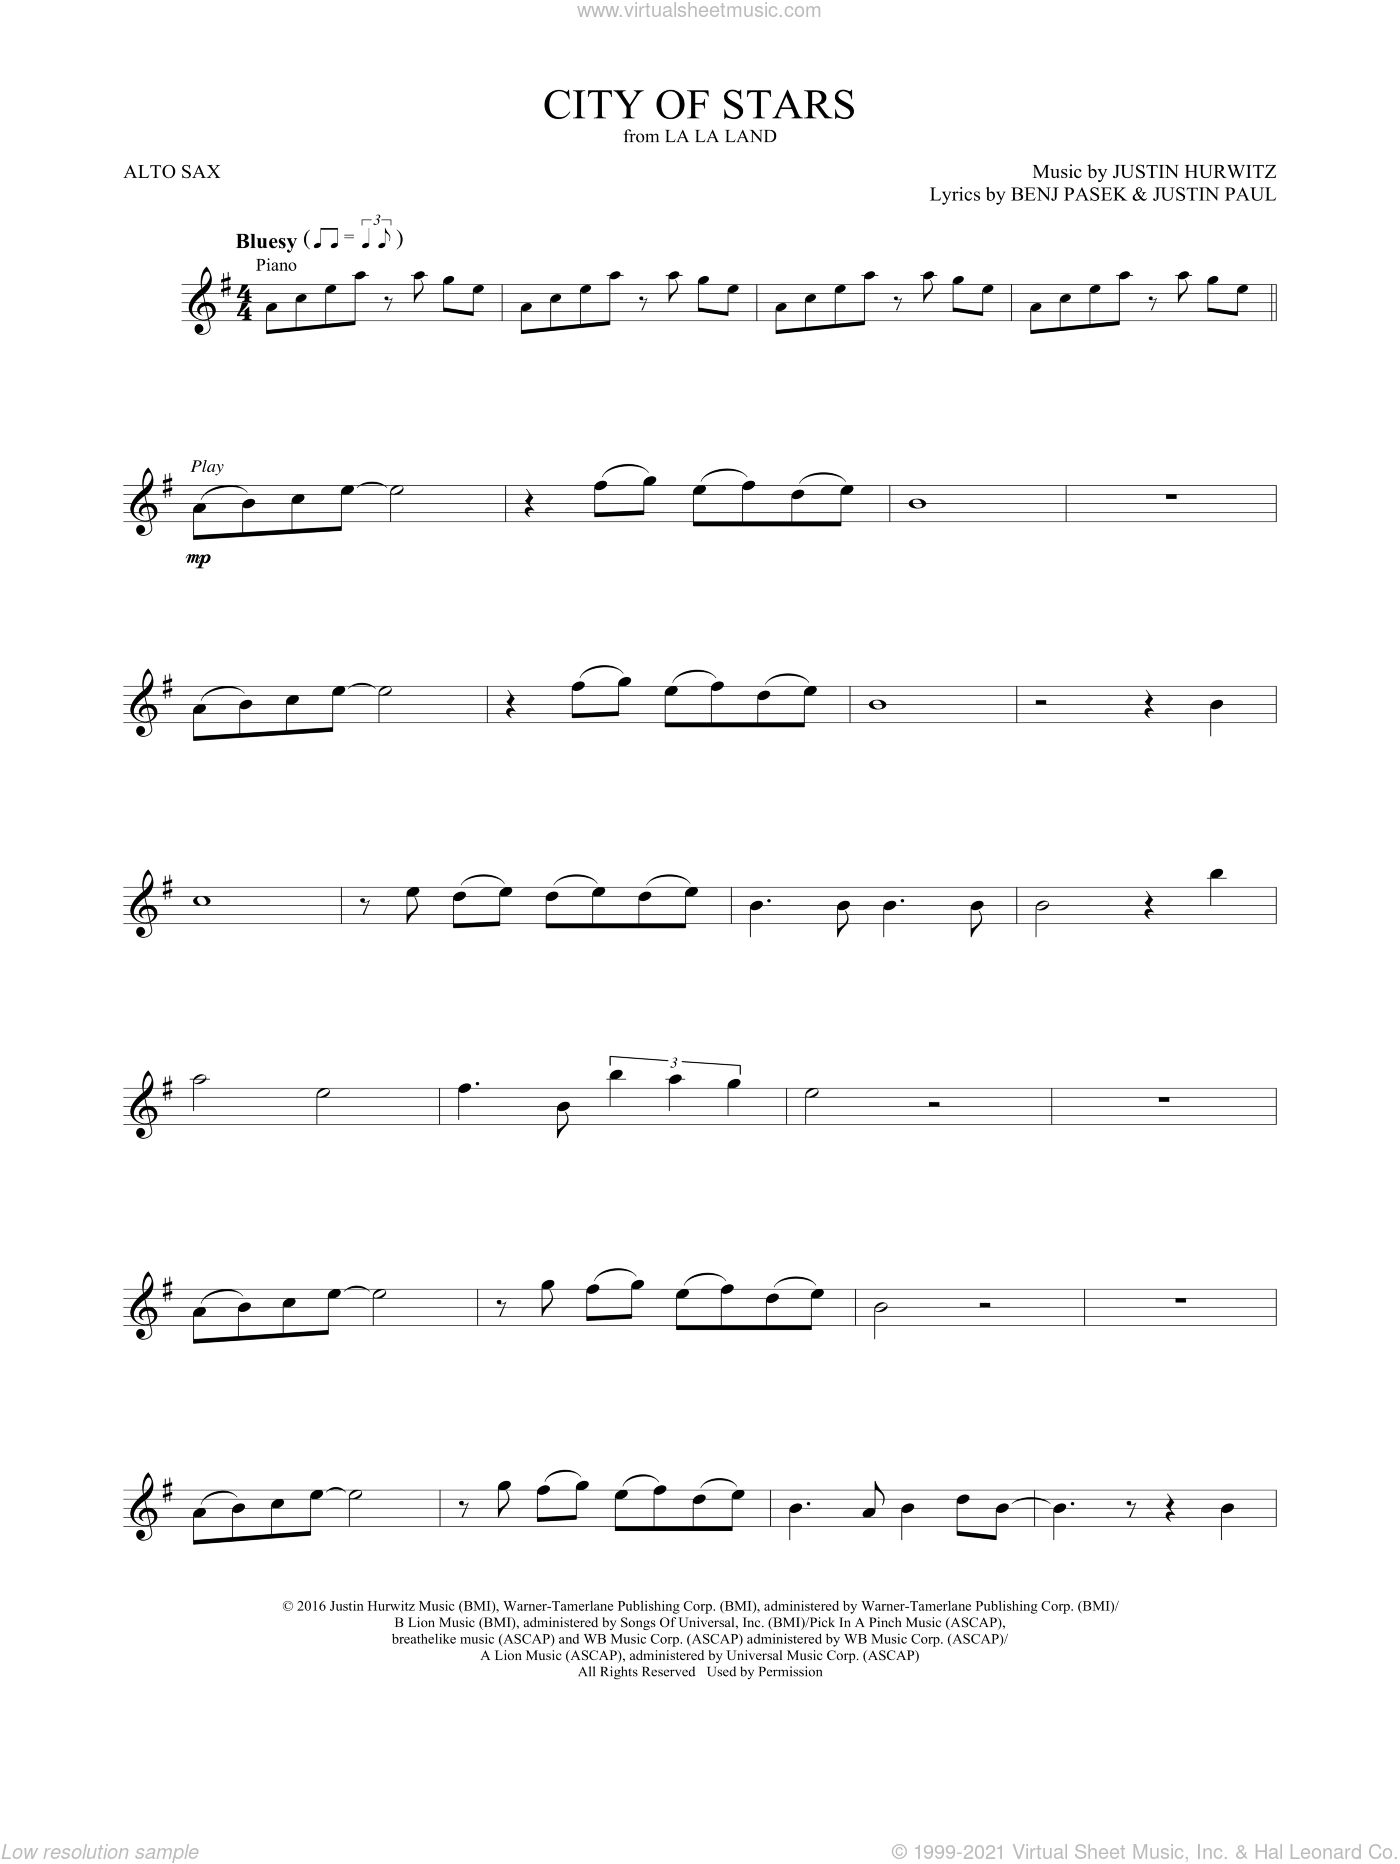 Stone - City of Stars (from La La Land) sheet music for alto saxophone solo